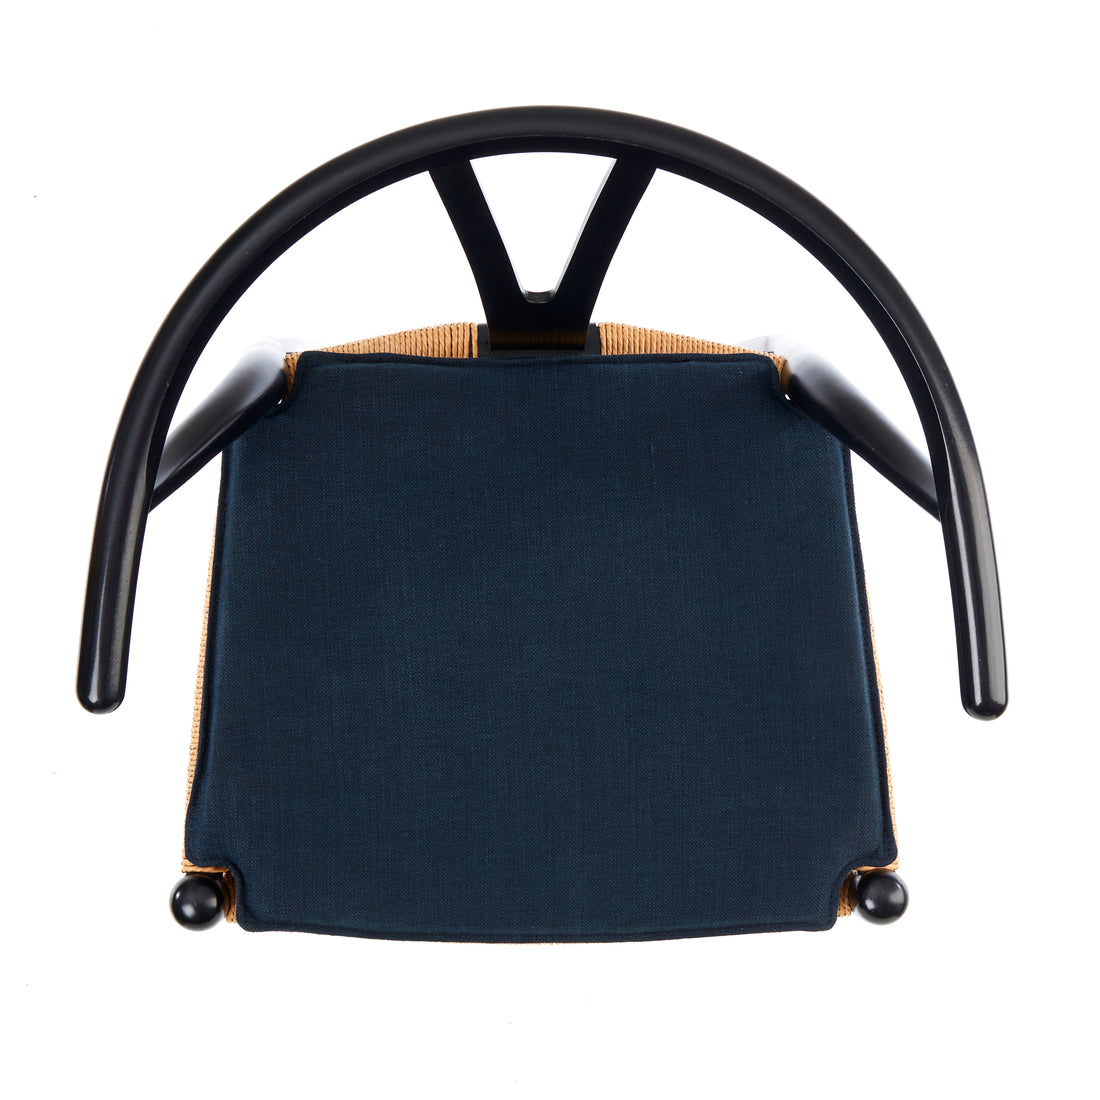 Cushion to Hans J. Wegner Y-chair Ch24 in black fabric padding